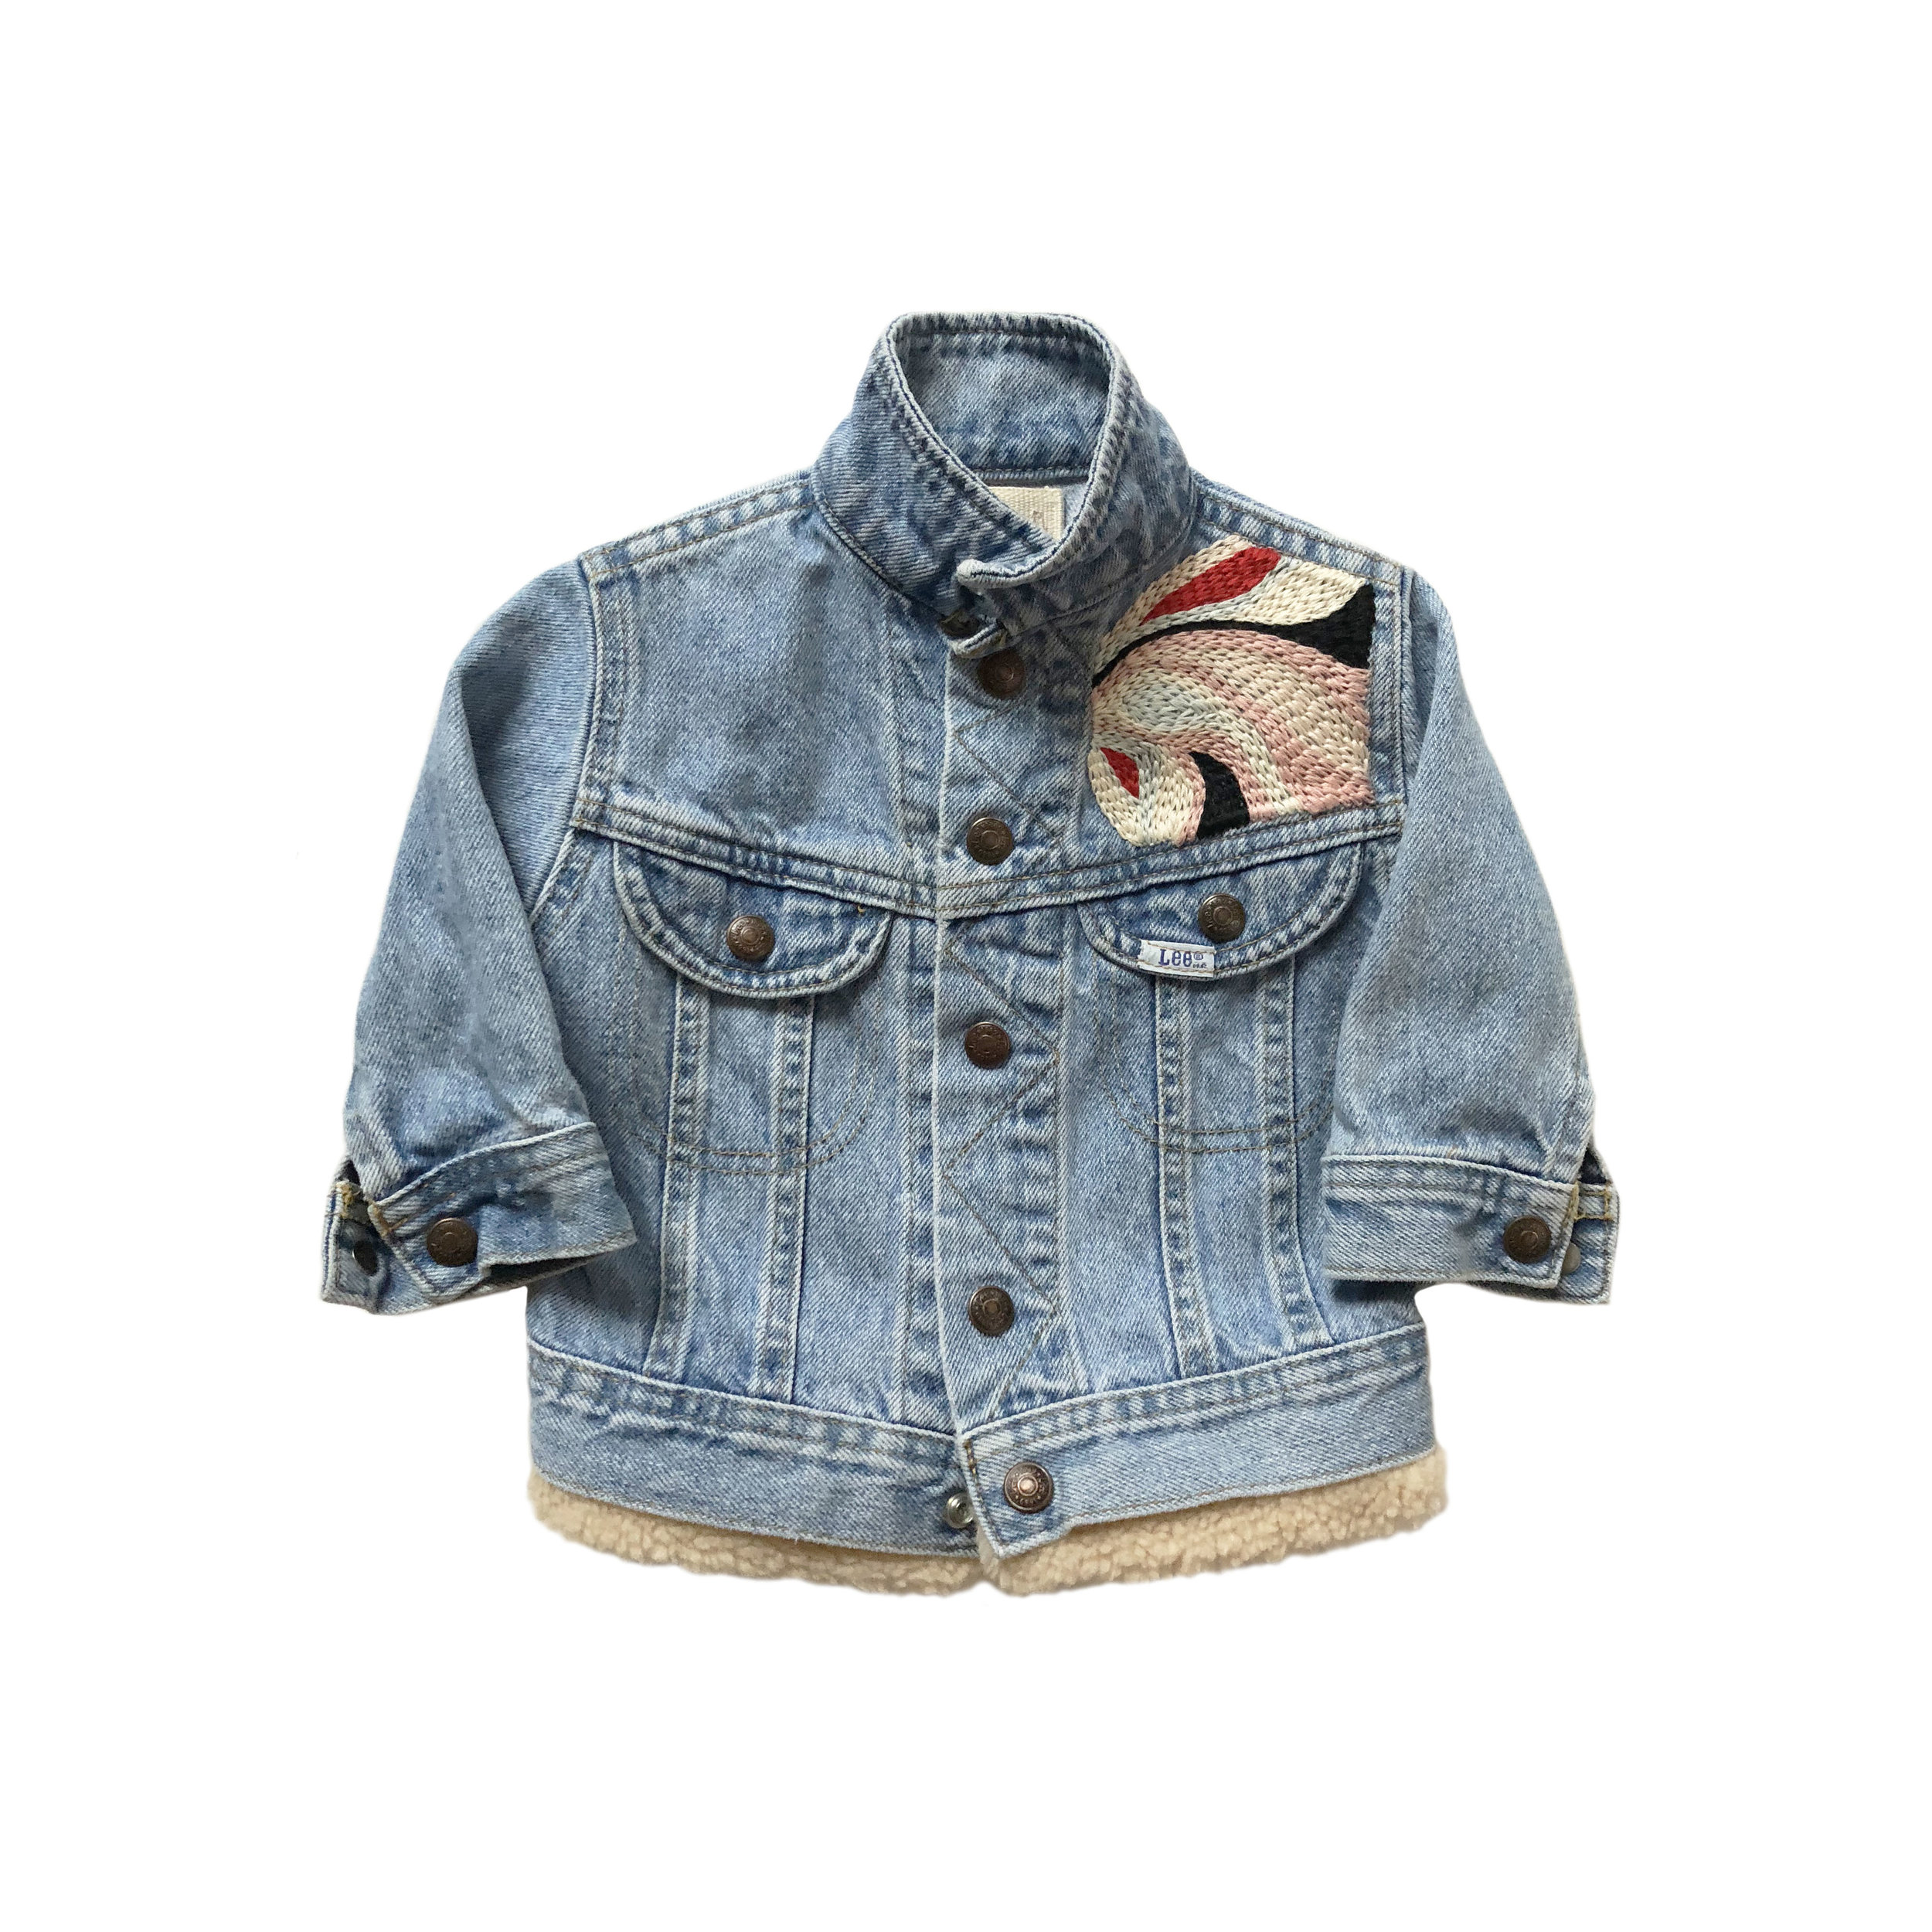 CUSTOM vintage Levis/Lee jean jacket 